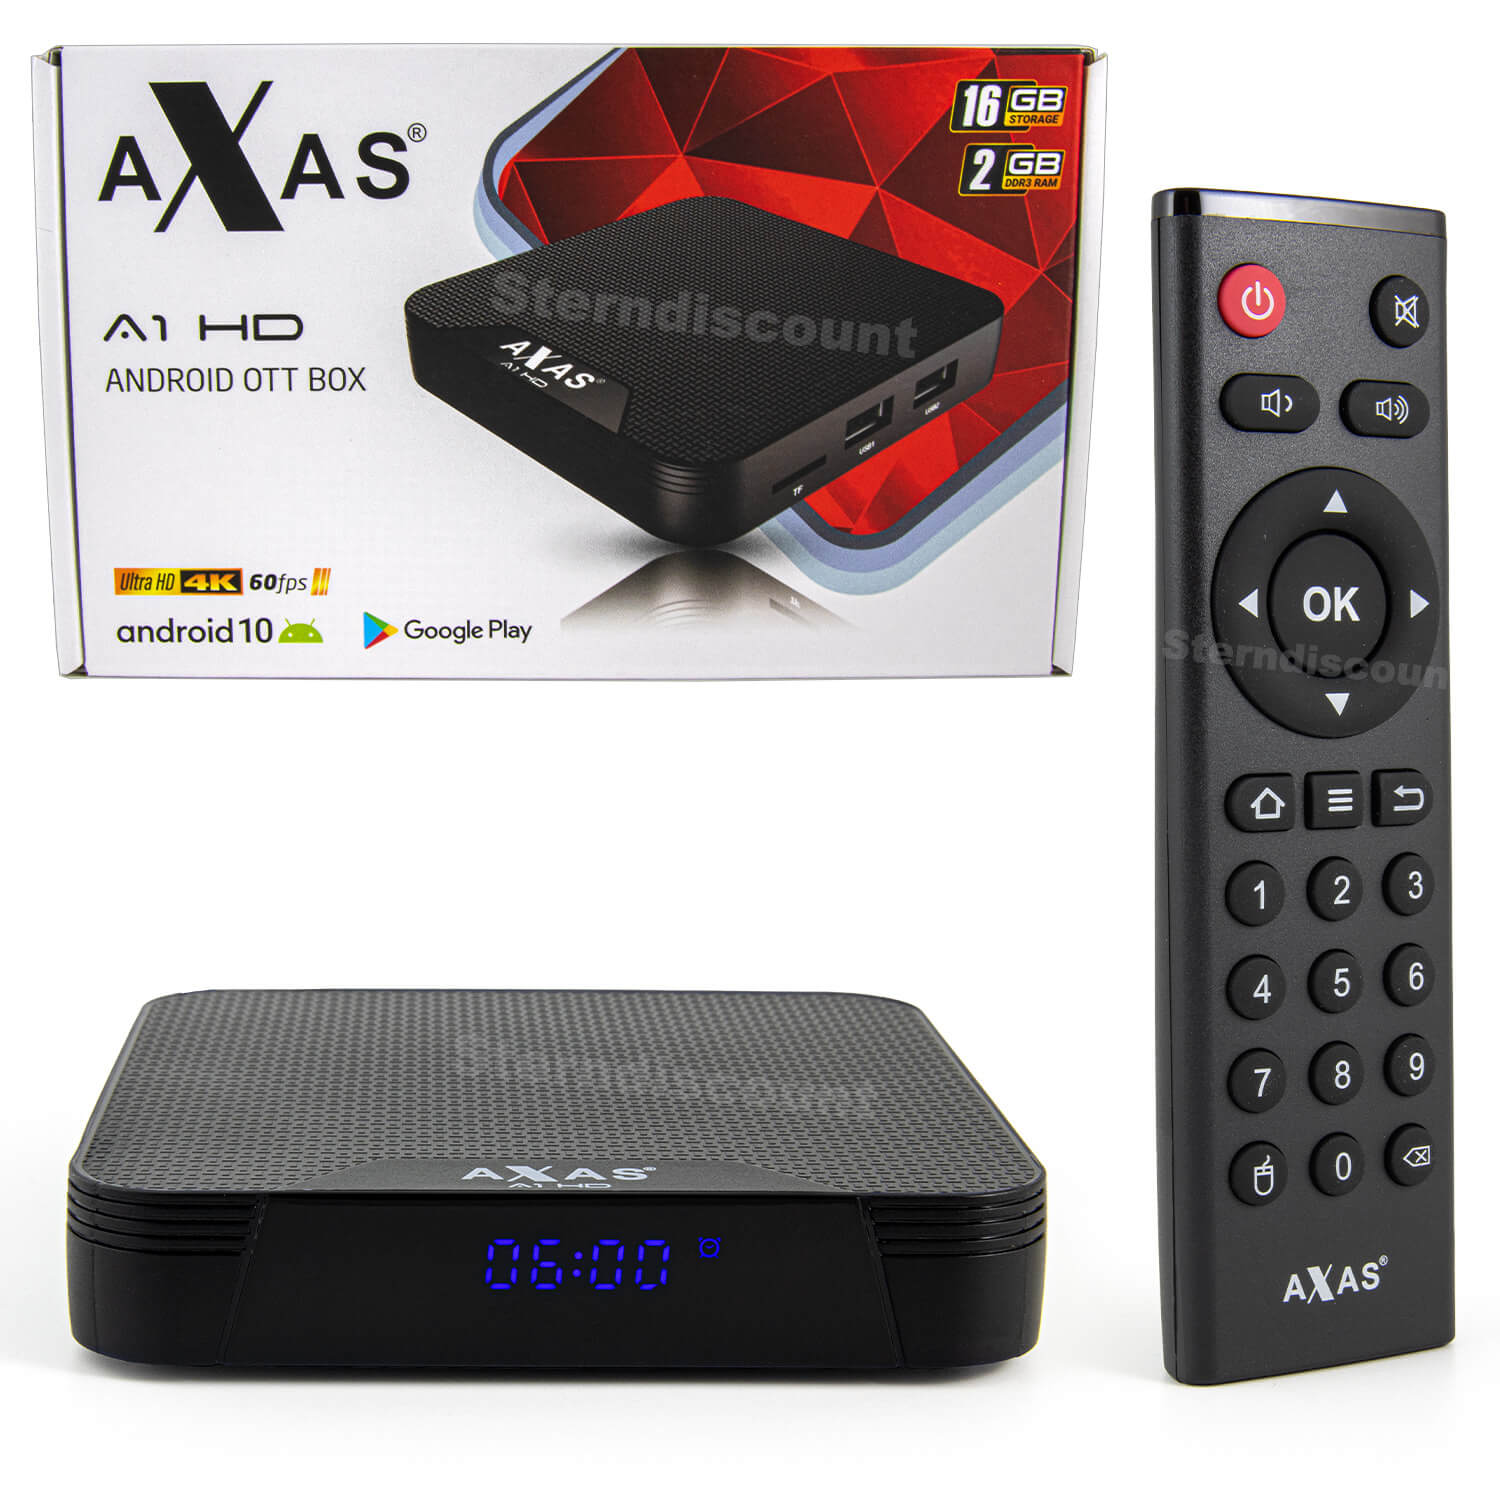 Axas A1 HD android IPTV Ott Box